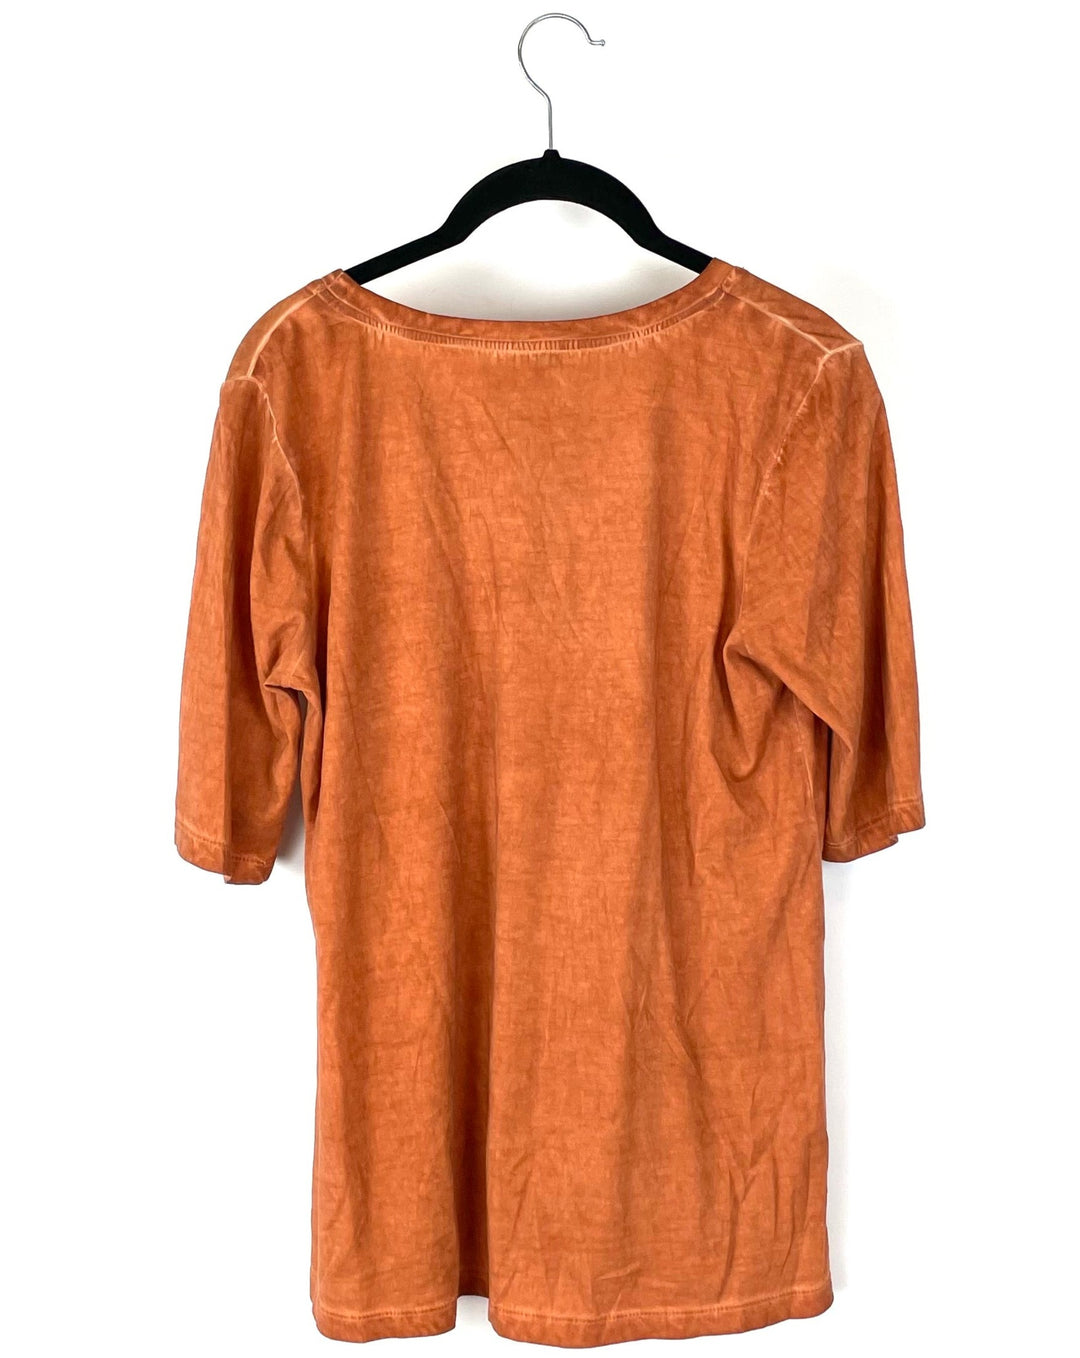 Burnt Orange Short Sleeve Top - Size 6-8